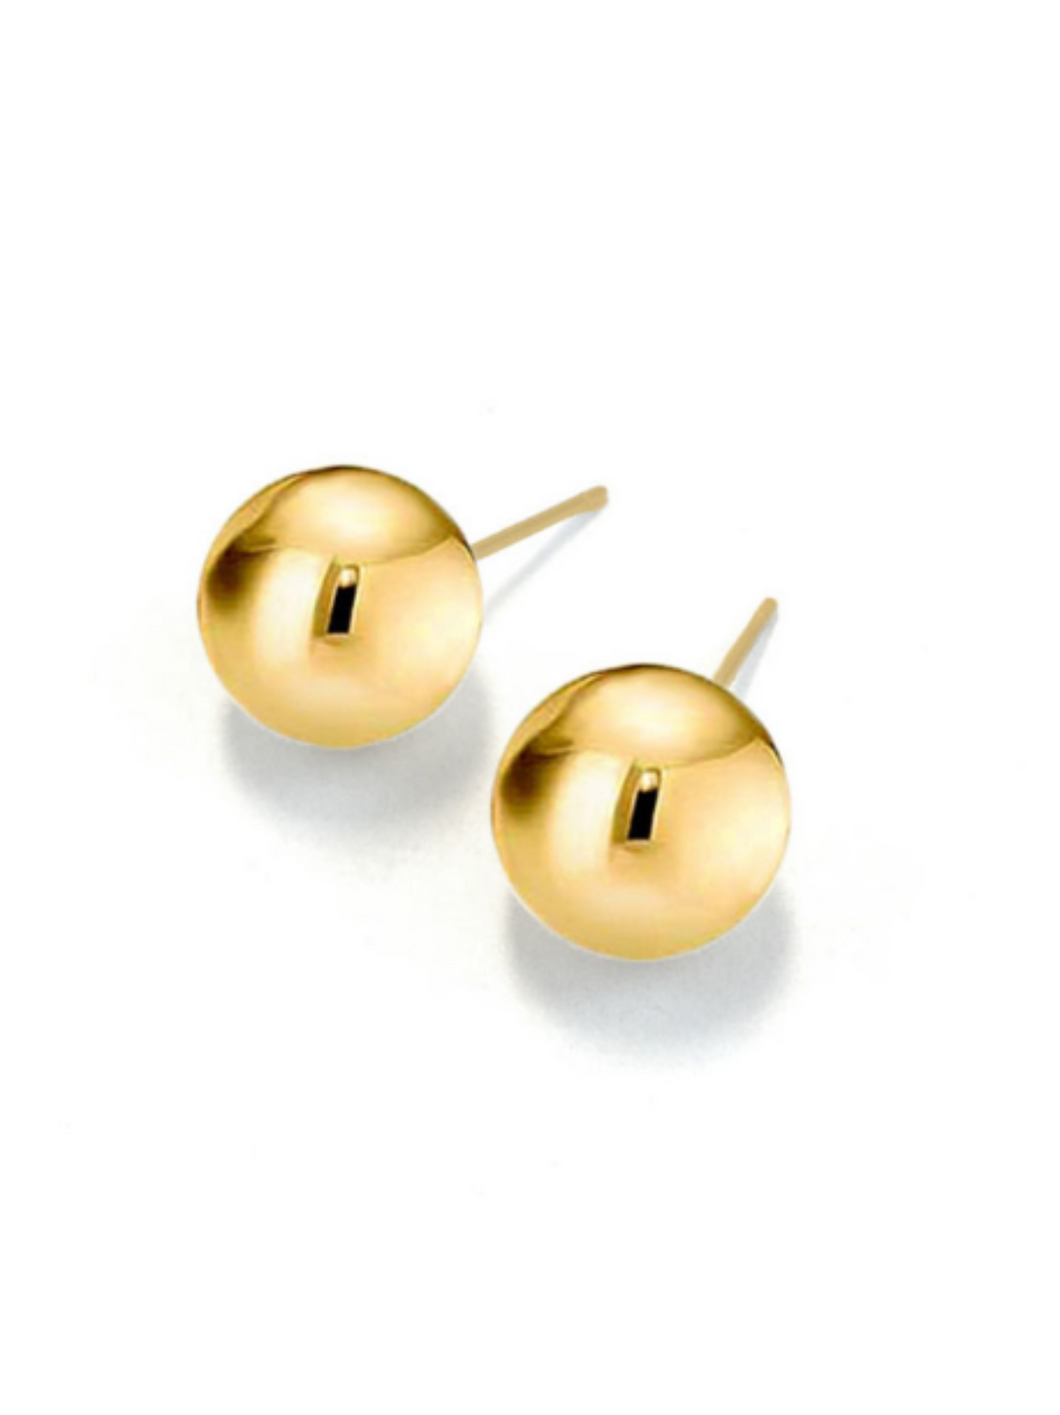 Gold Ball Earrings: Large